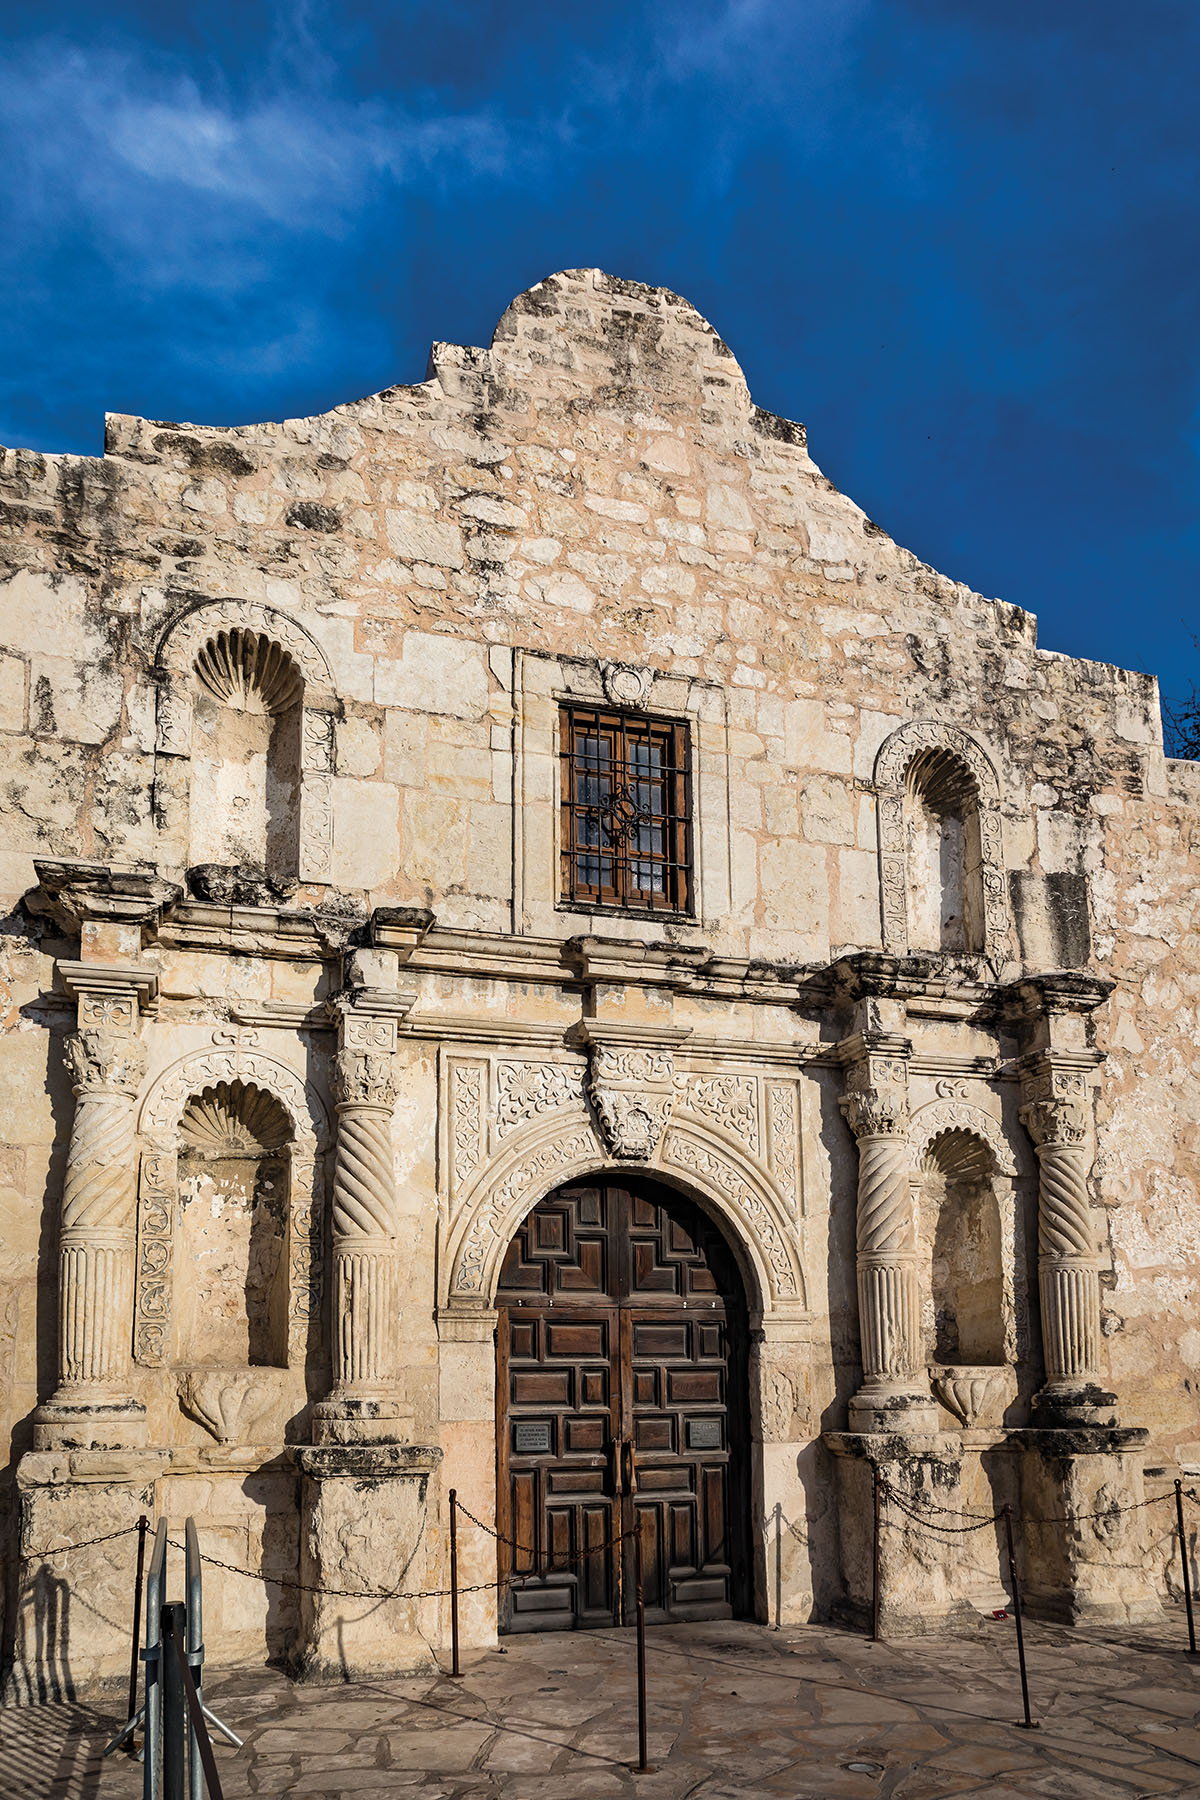 The stone facade of the Alamo under a blue sky